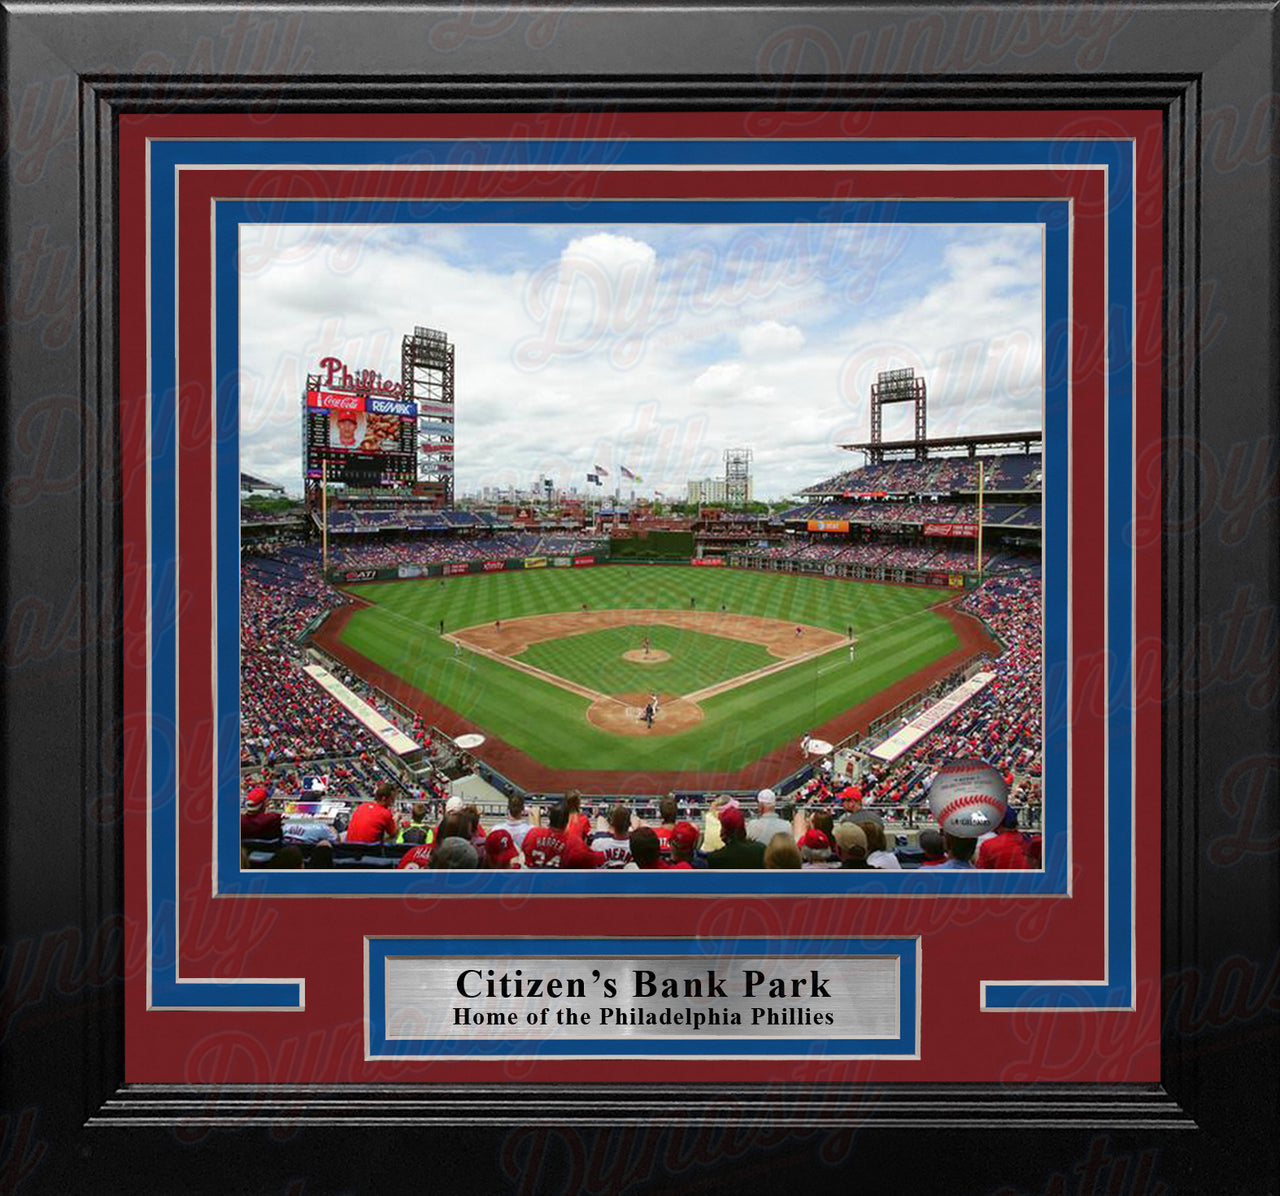 Philadelphia Phillies Citizen's Bank Park MLB Baseball 8" x 10" Framed and Matted Stadium Photo - Dynasty Sports & Framing 